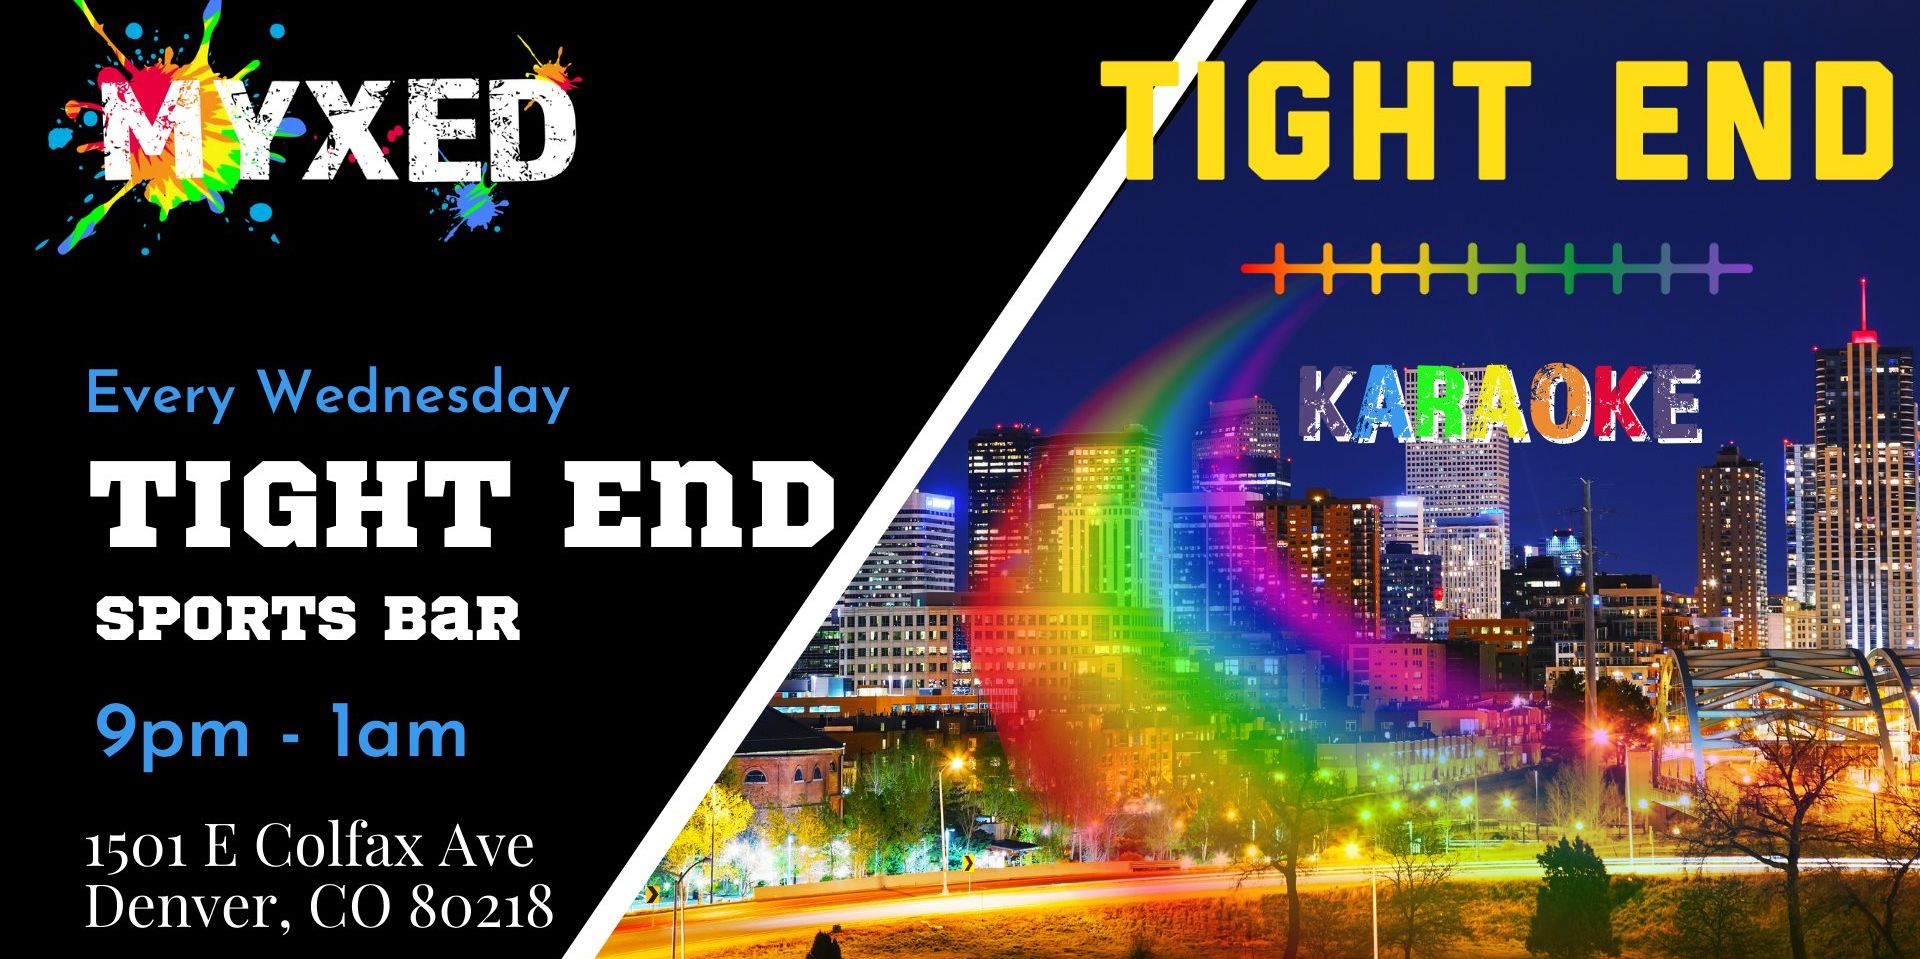 Tight End Bar - Karaoke promotional image